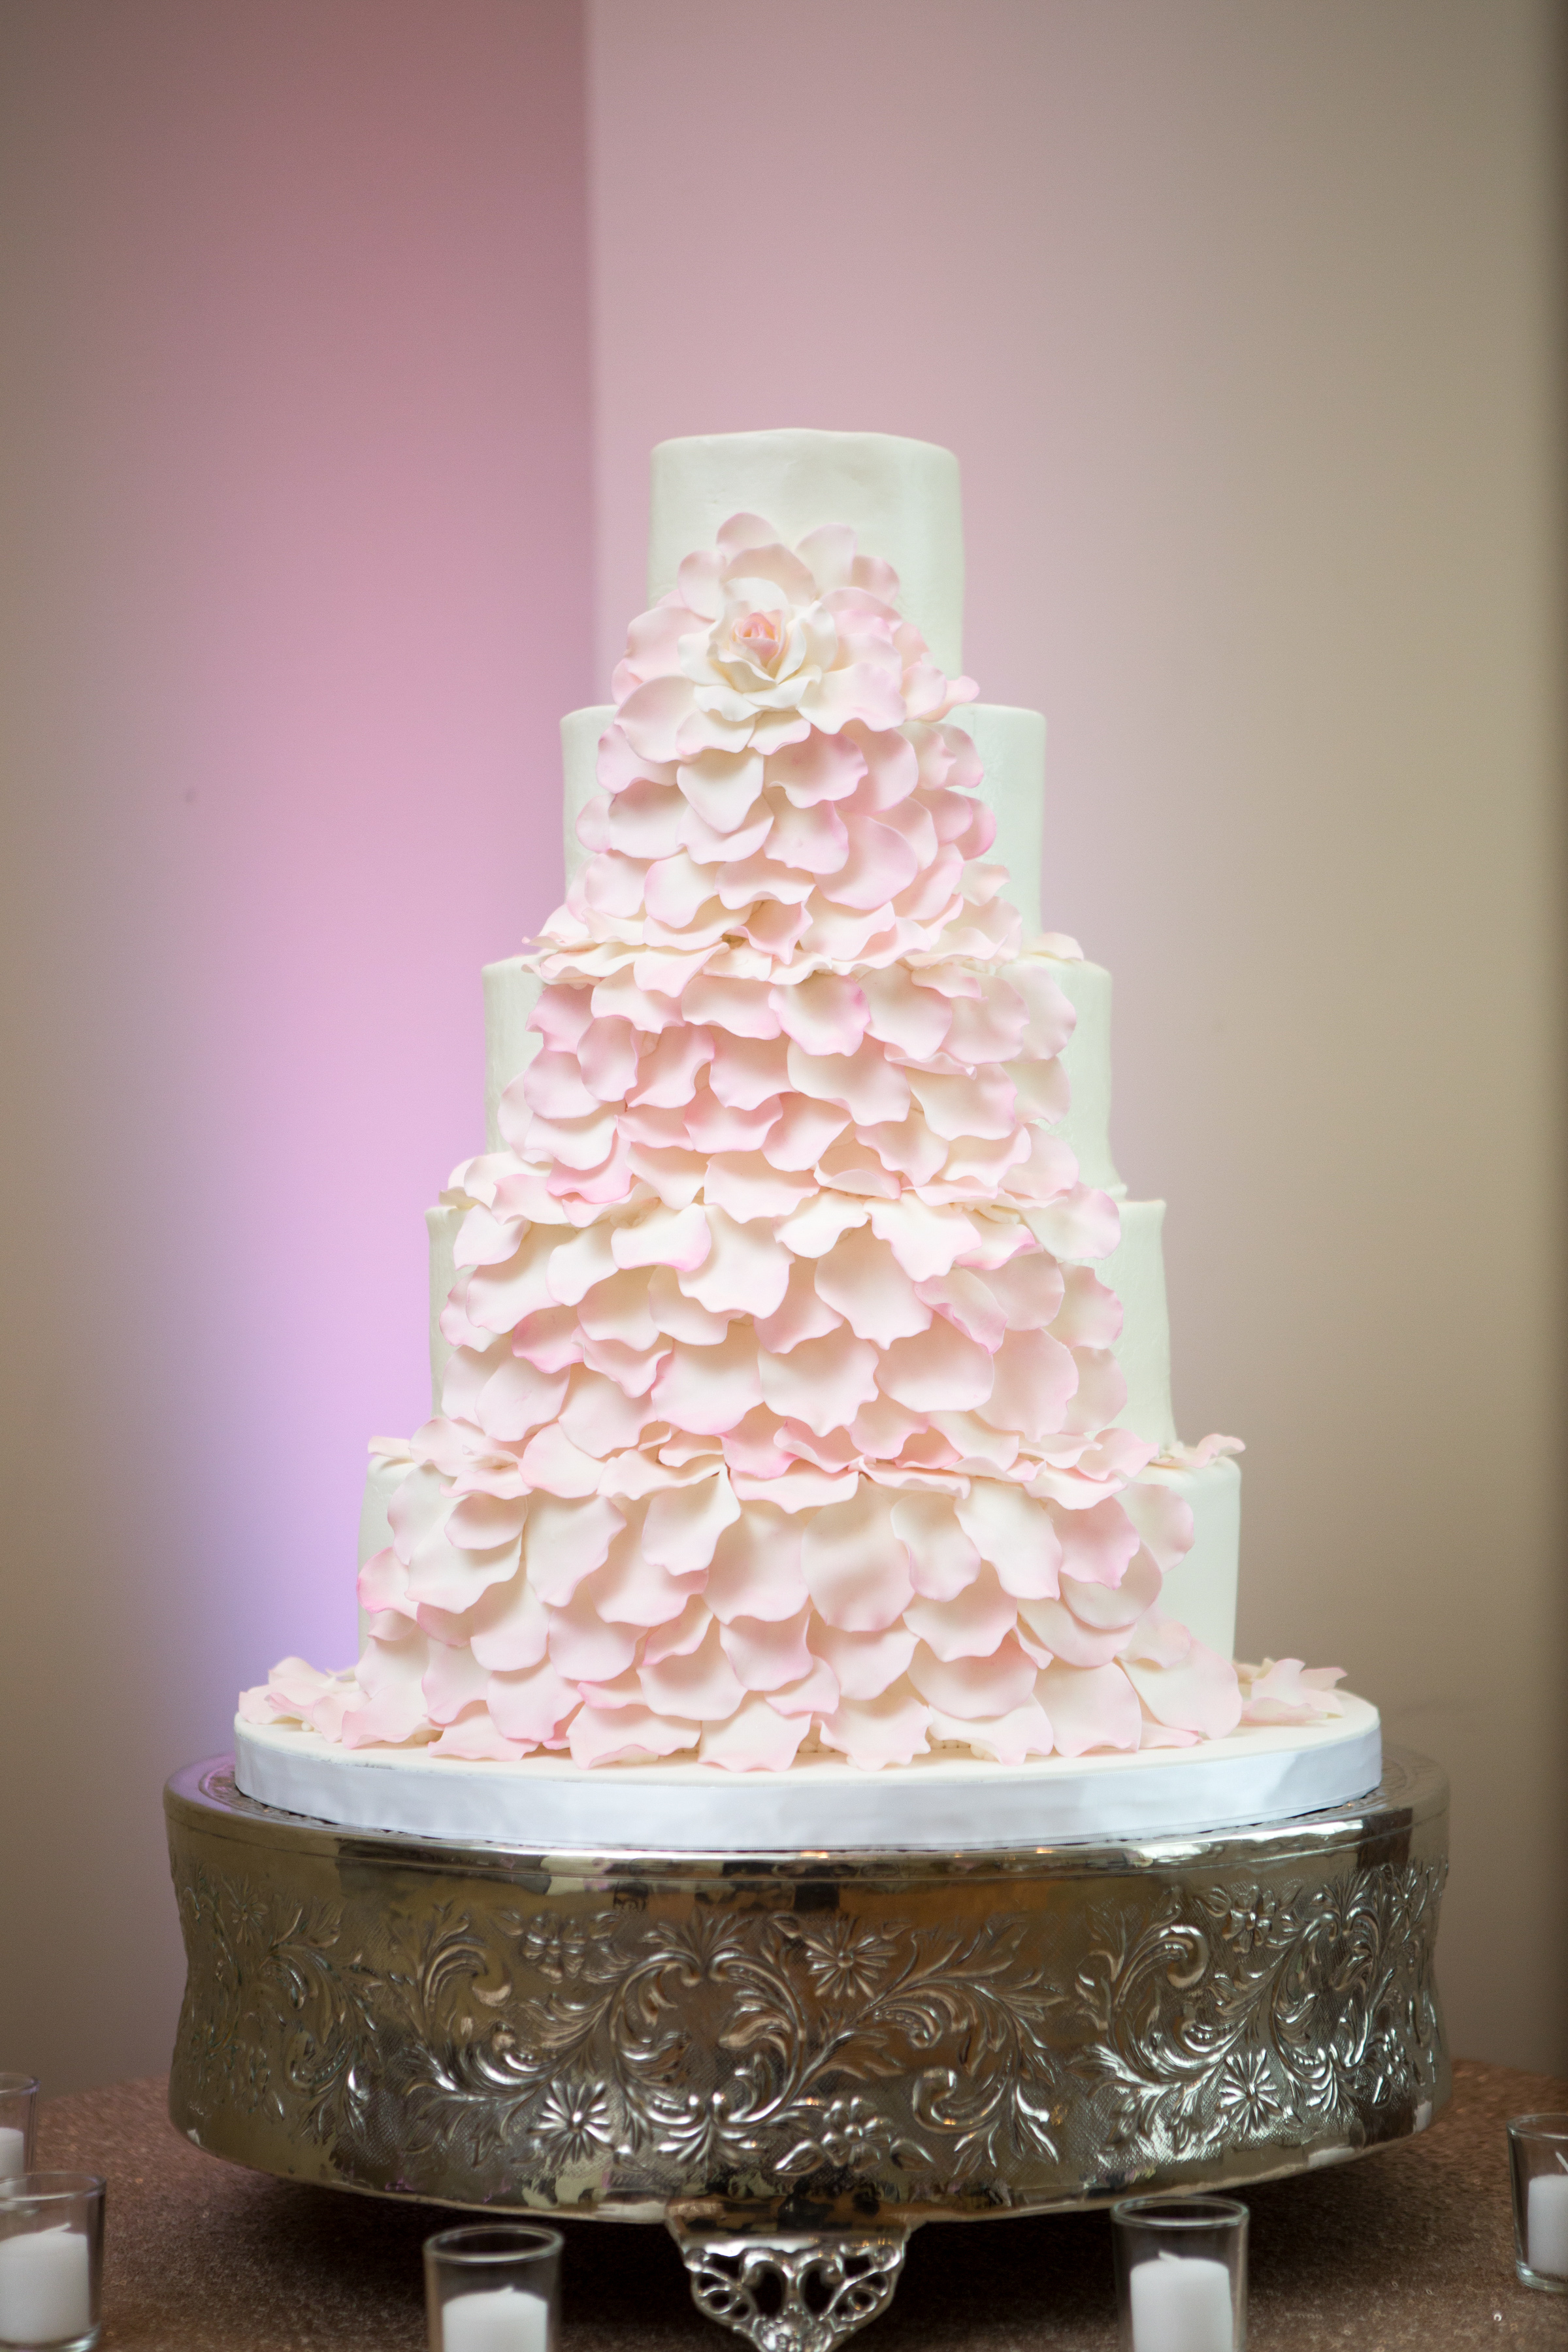 Liz & Jay: Country Club Wedding, cake with pink flowers